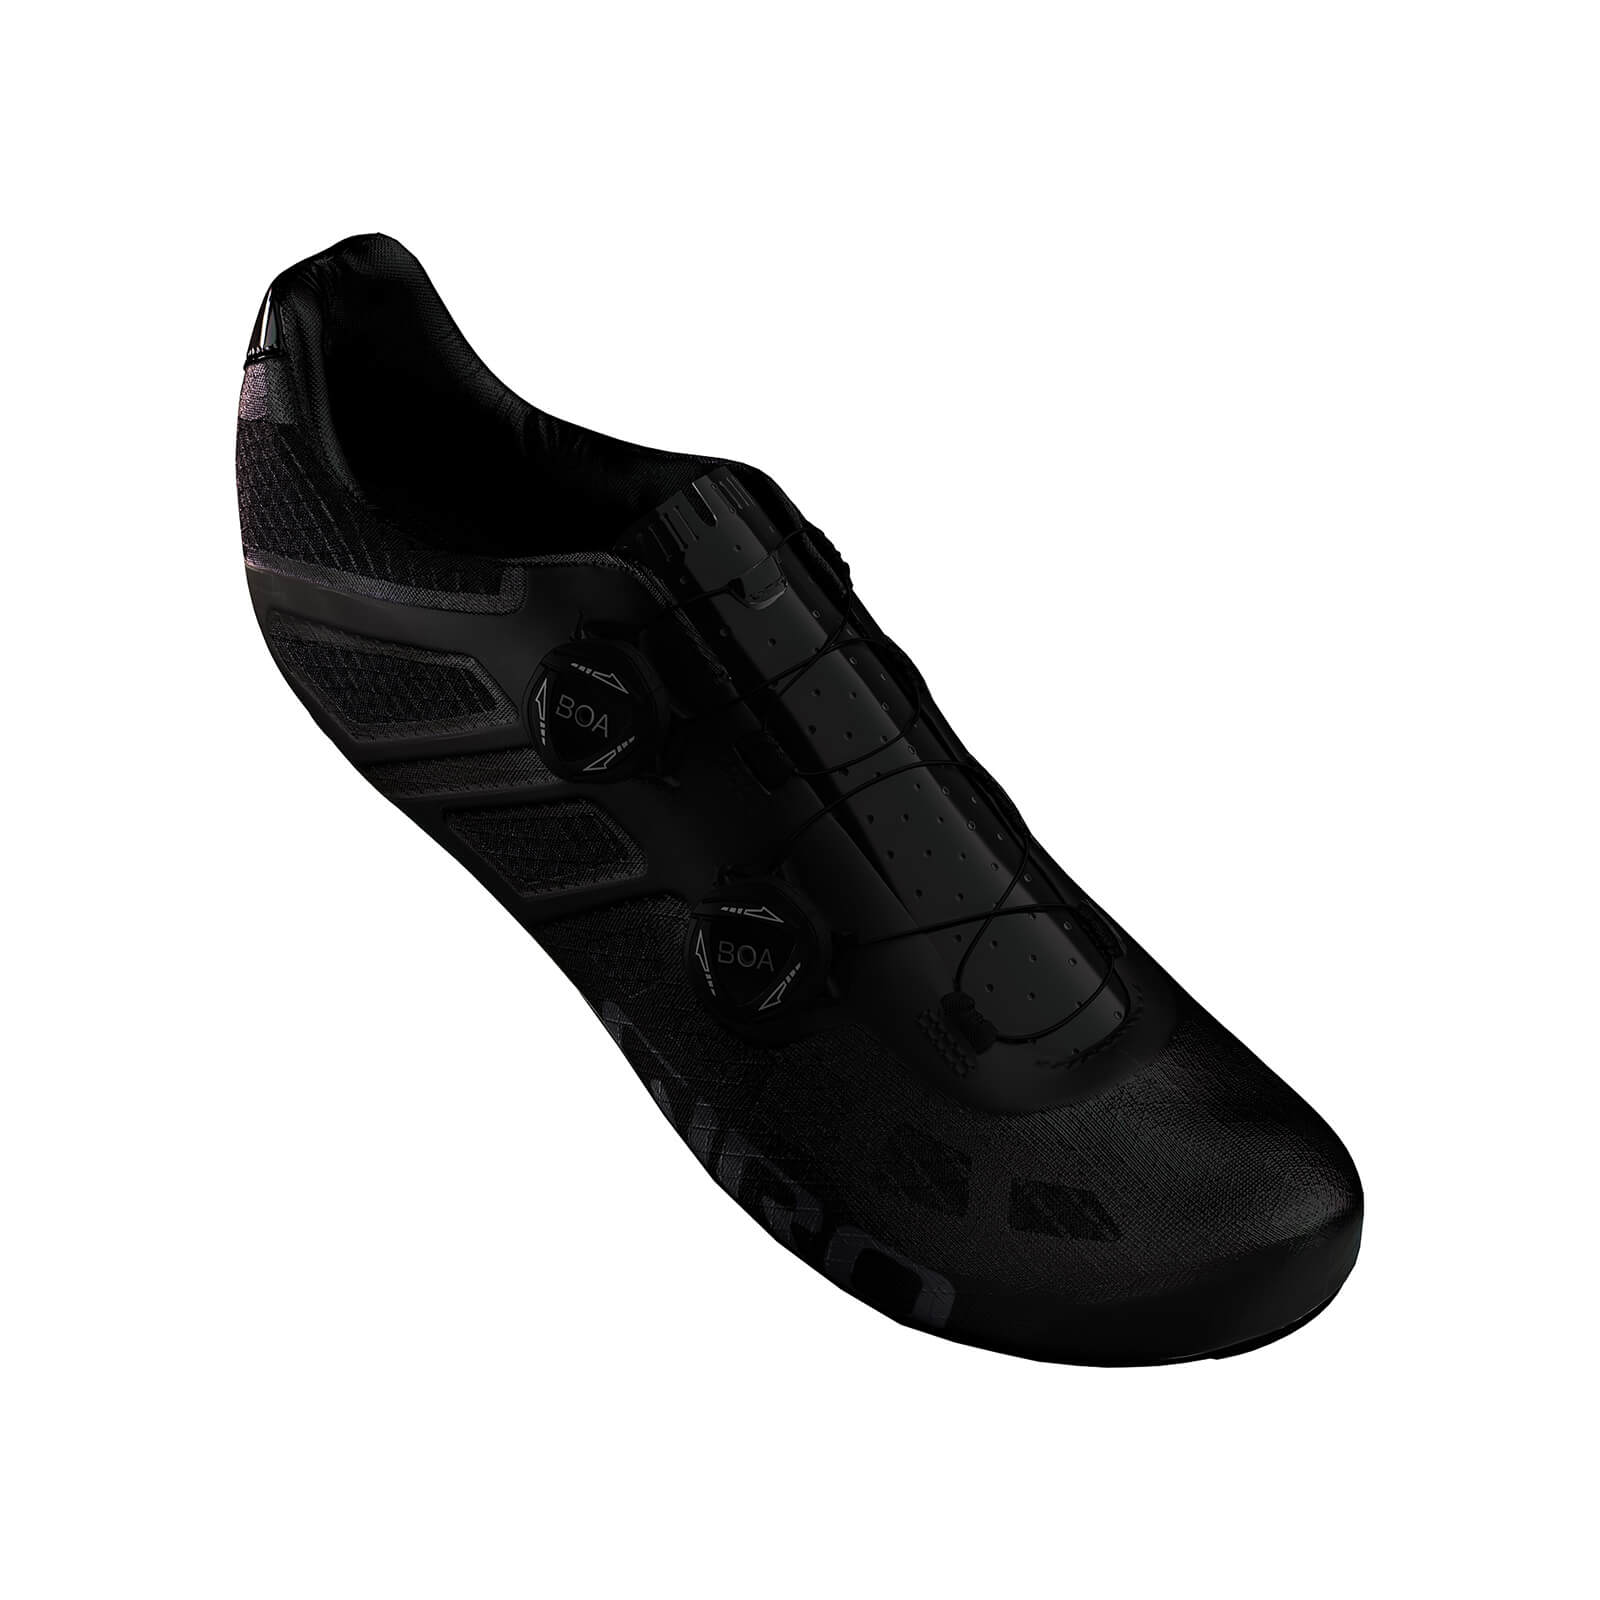 Giro Imperial Road Shoe - EU 46 - Black